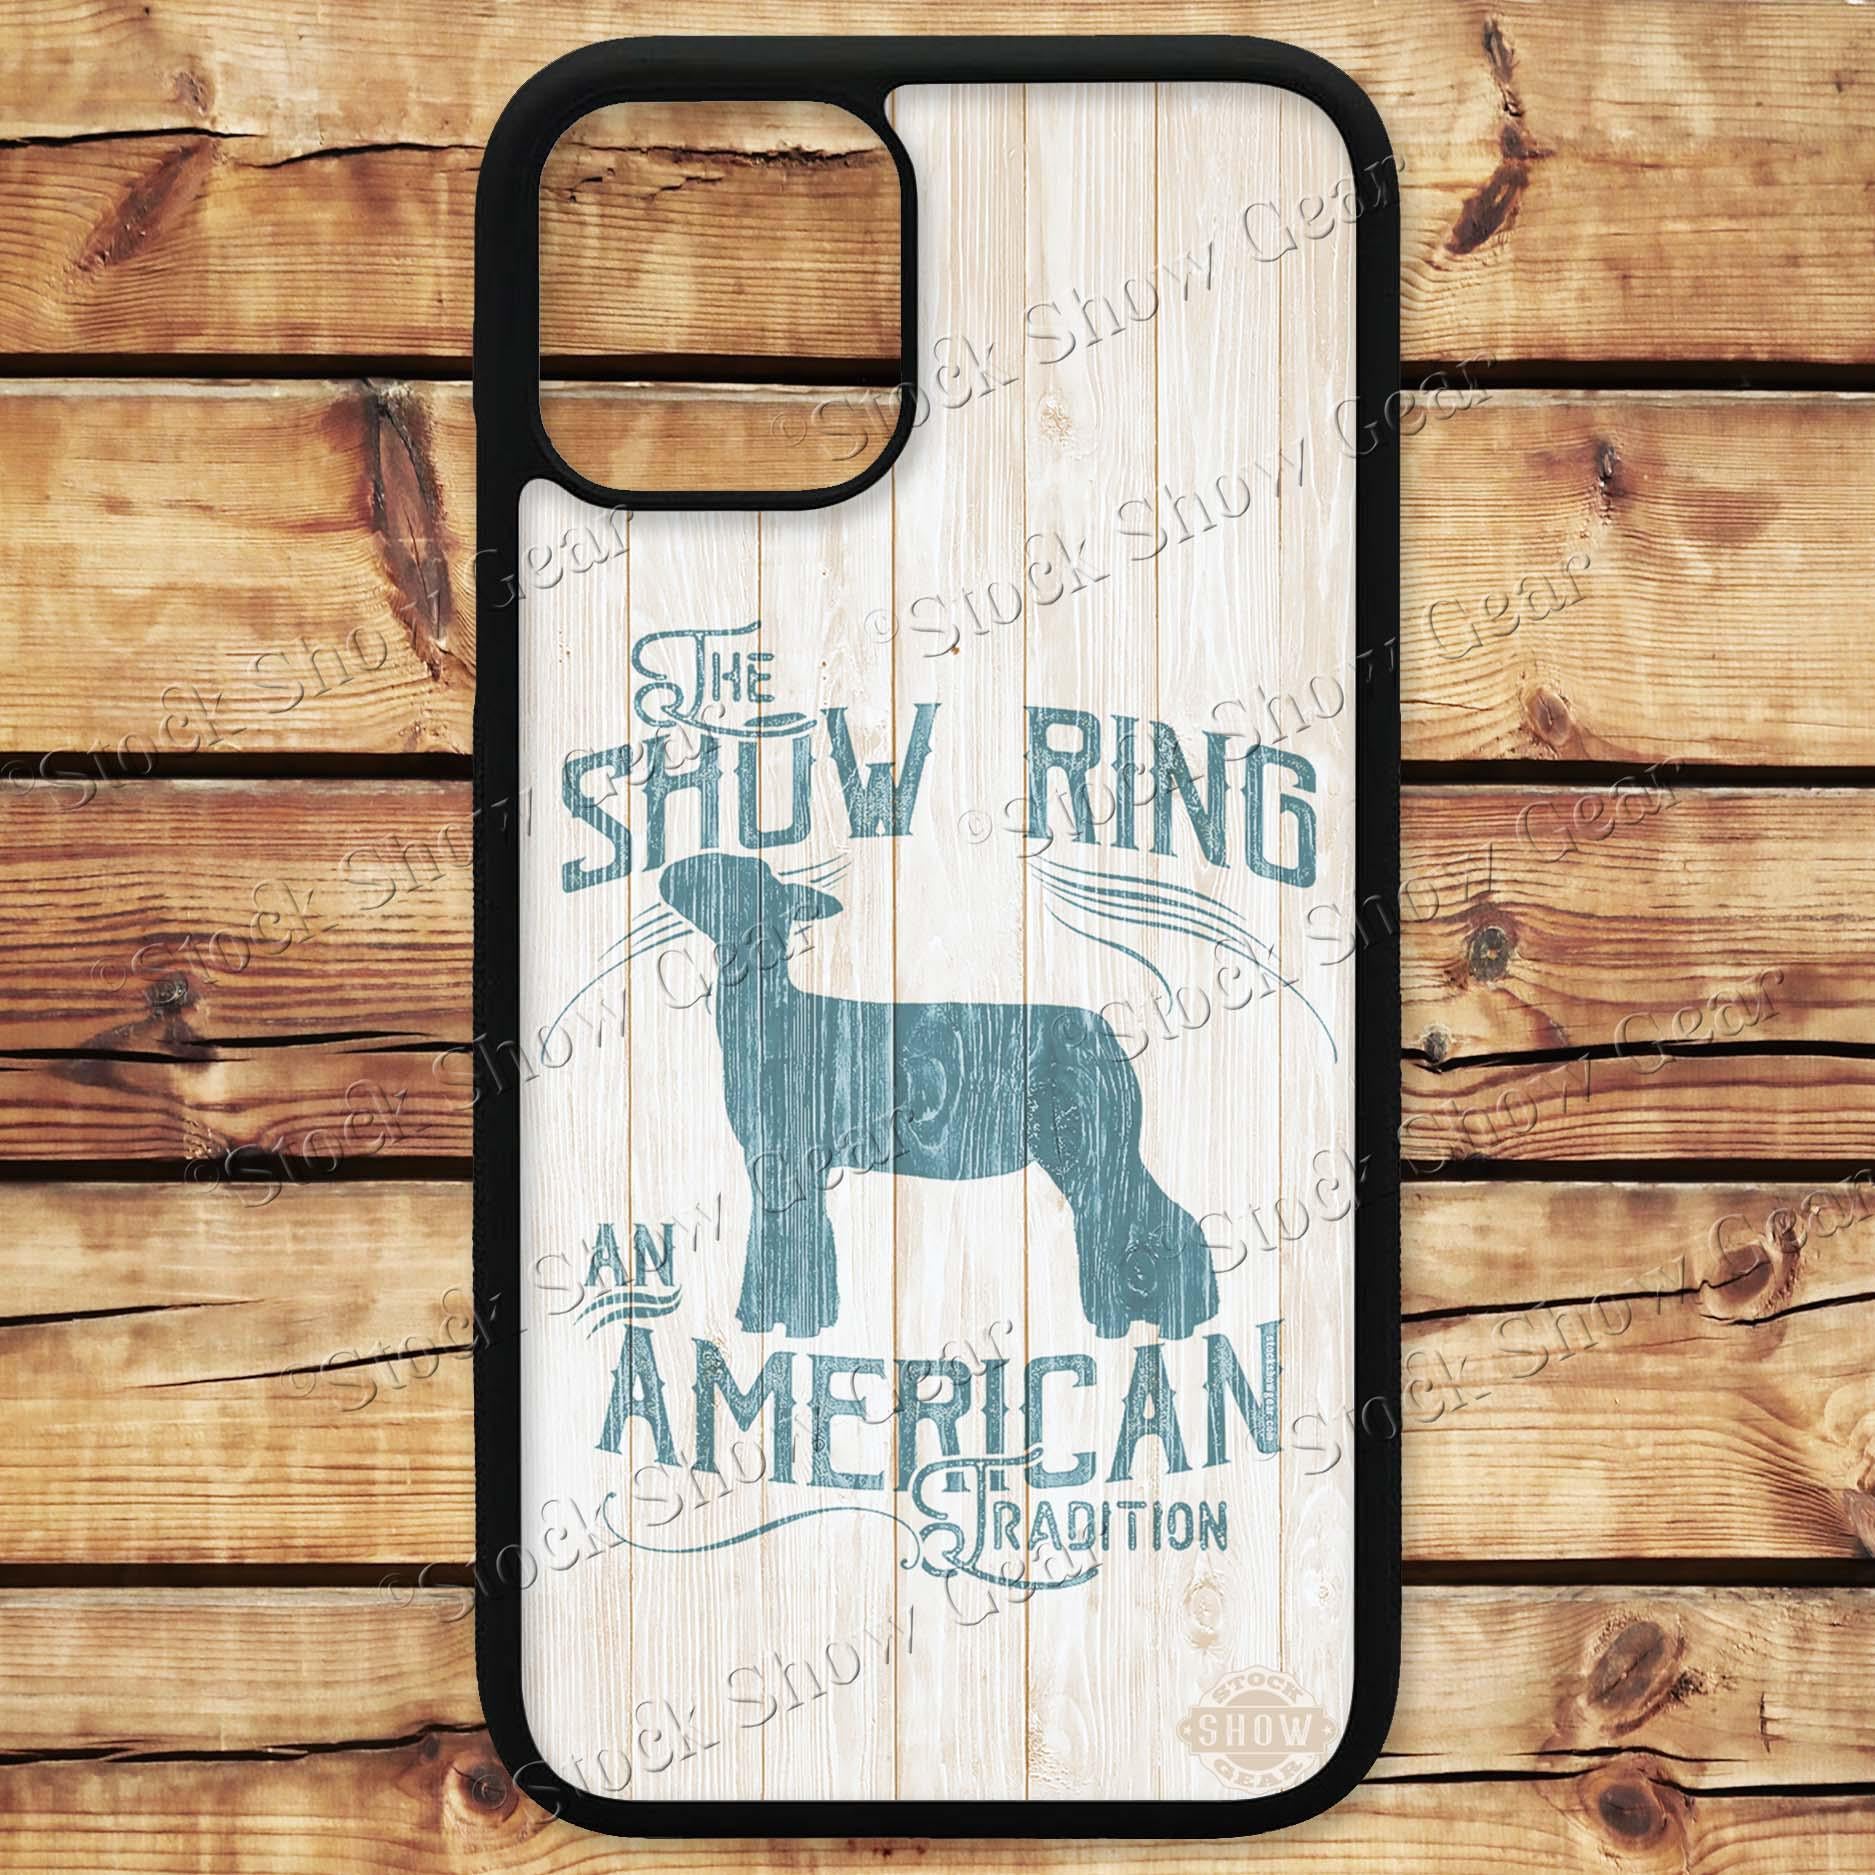 Club Lamb "Show Ring" Phone Cases